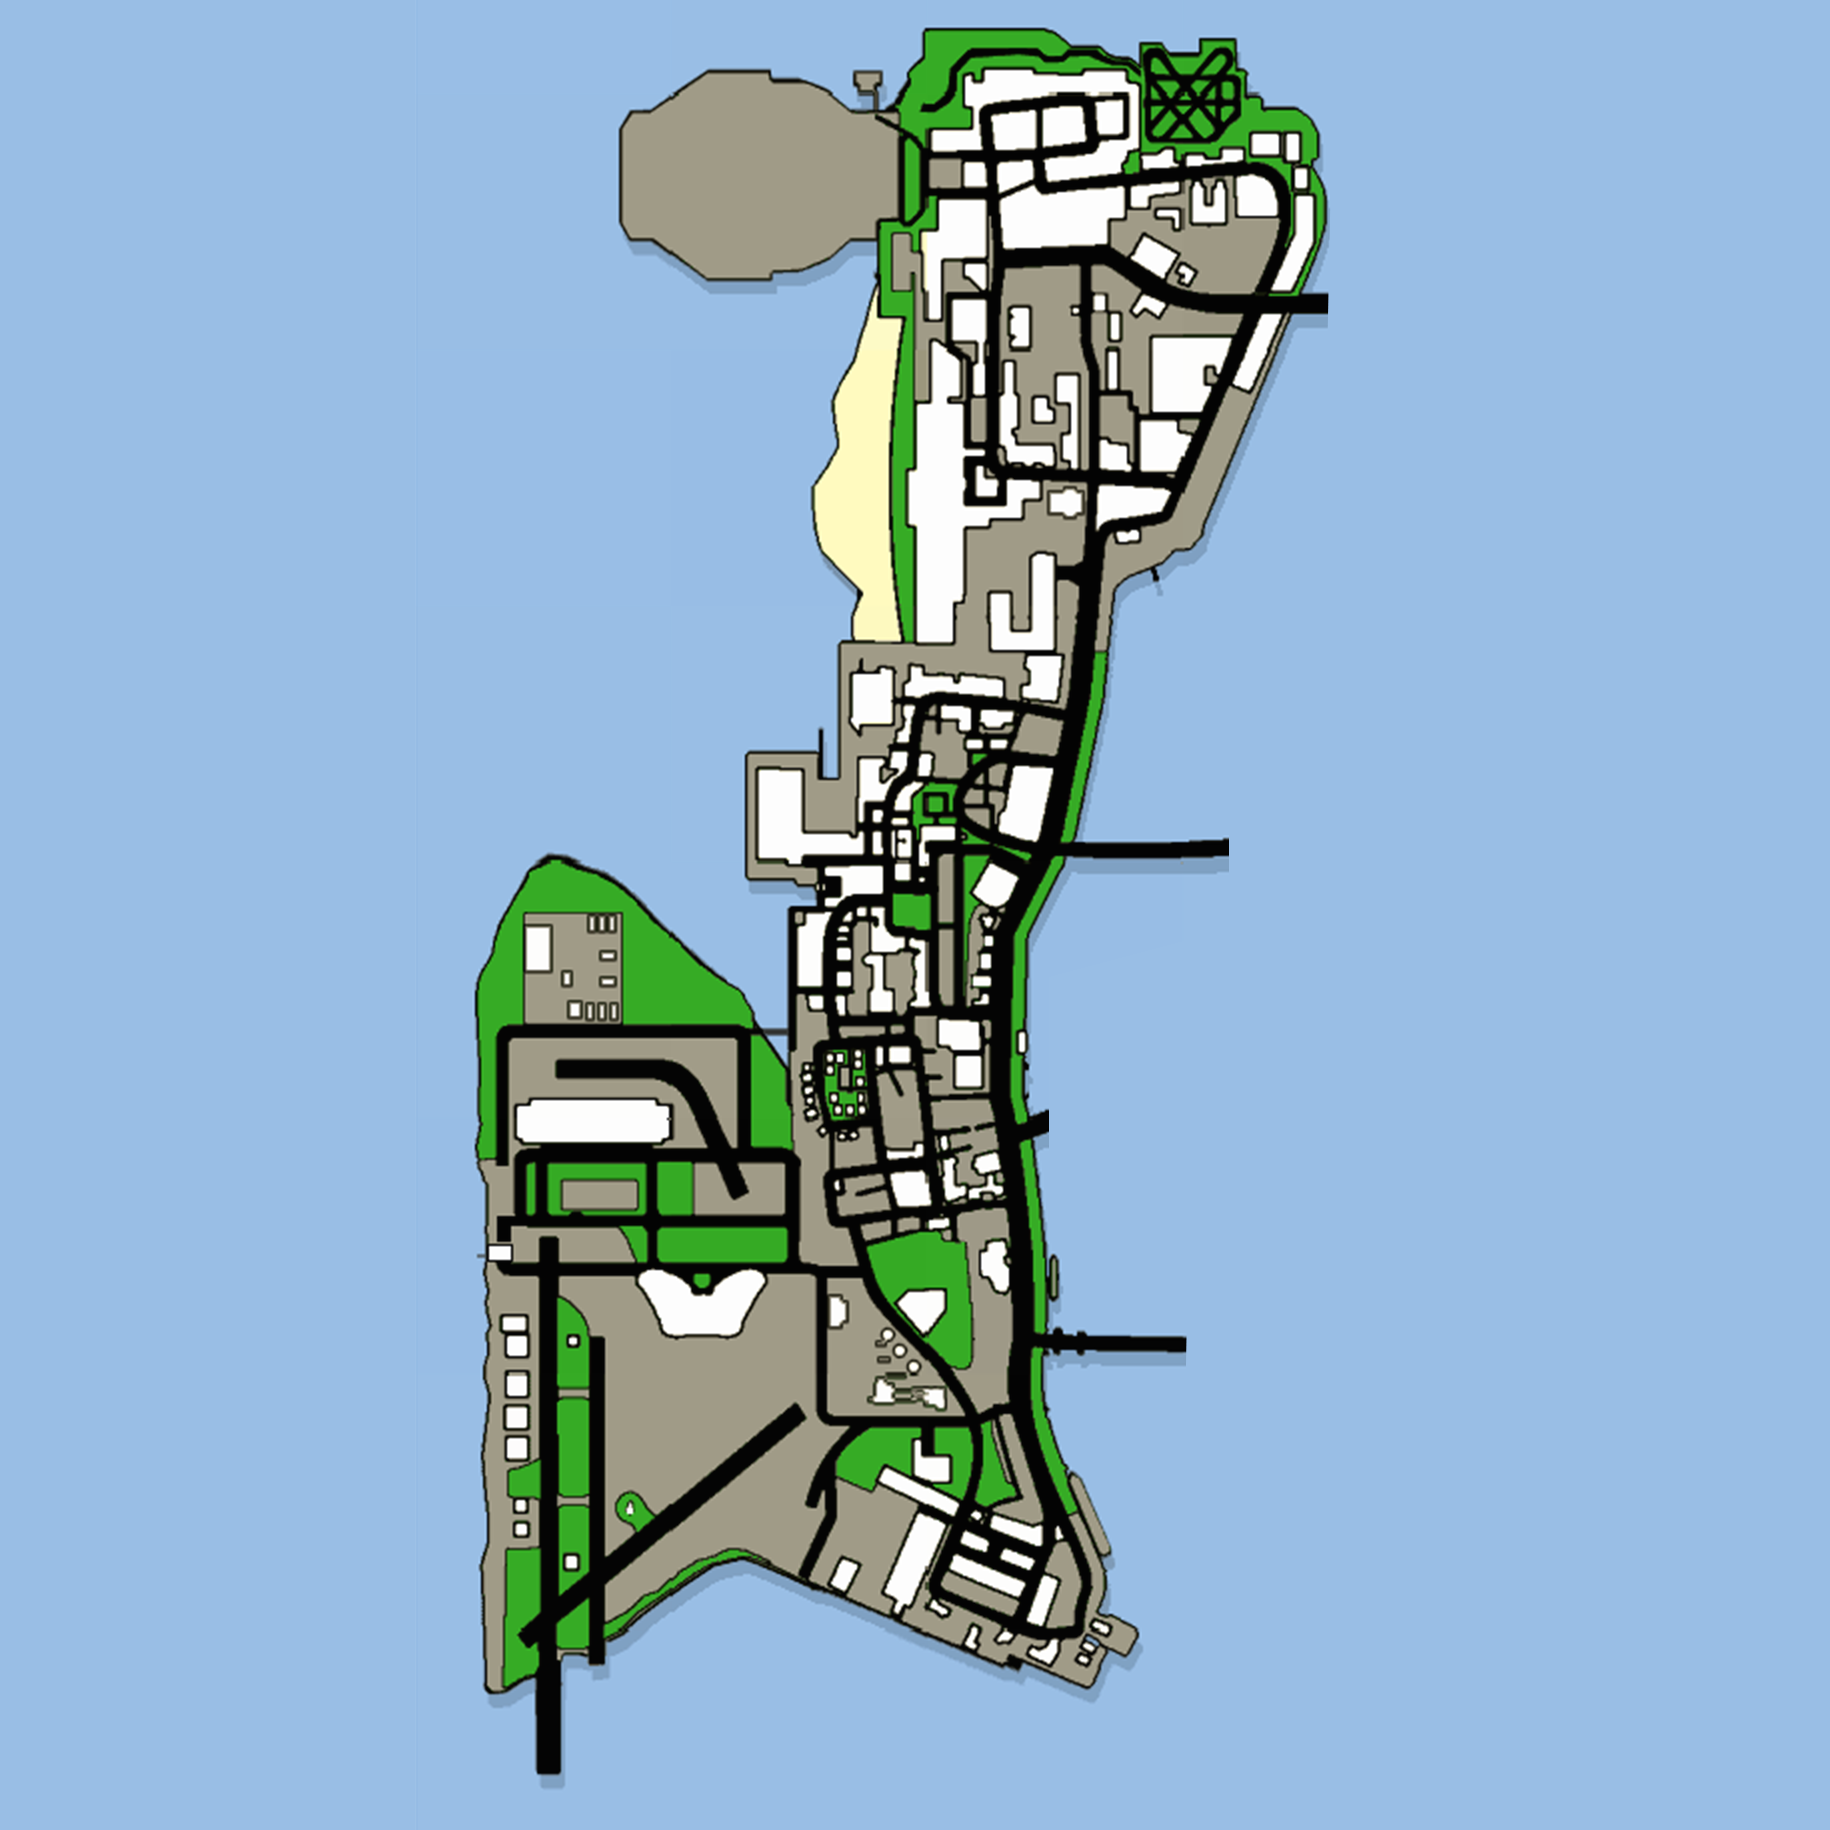 gta vice city stories map